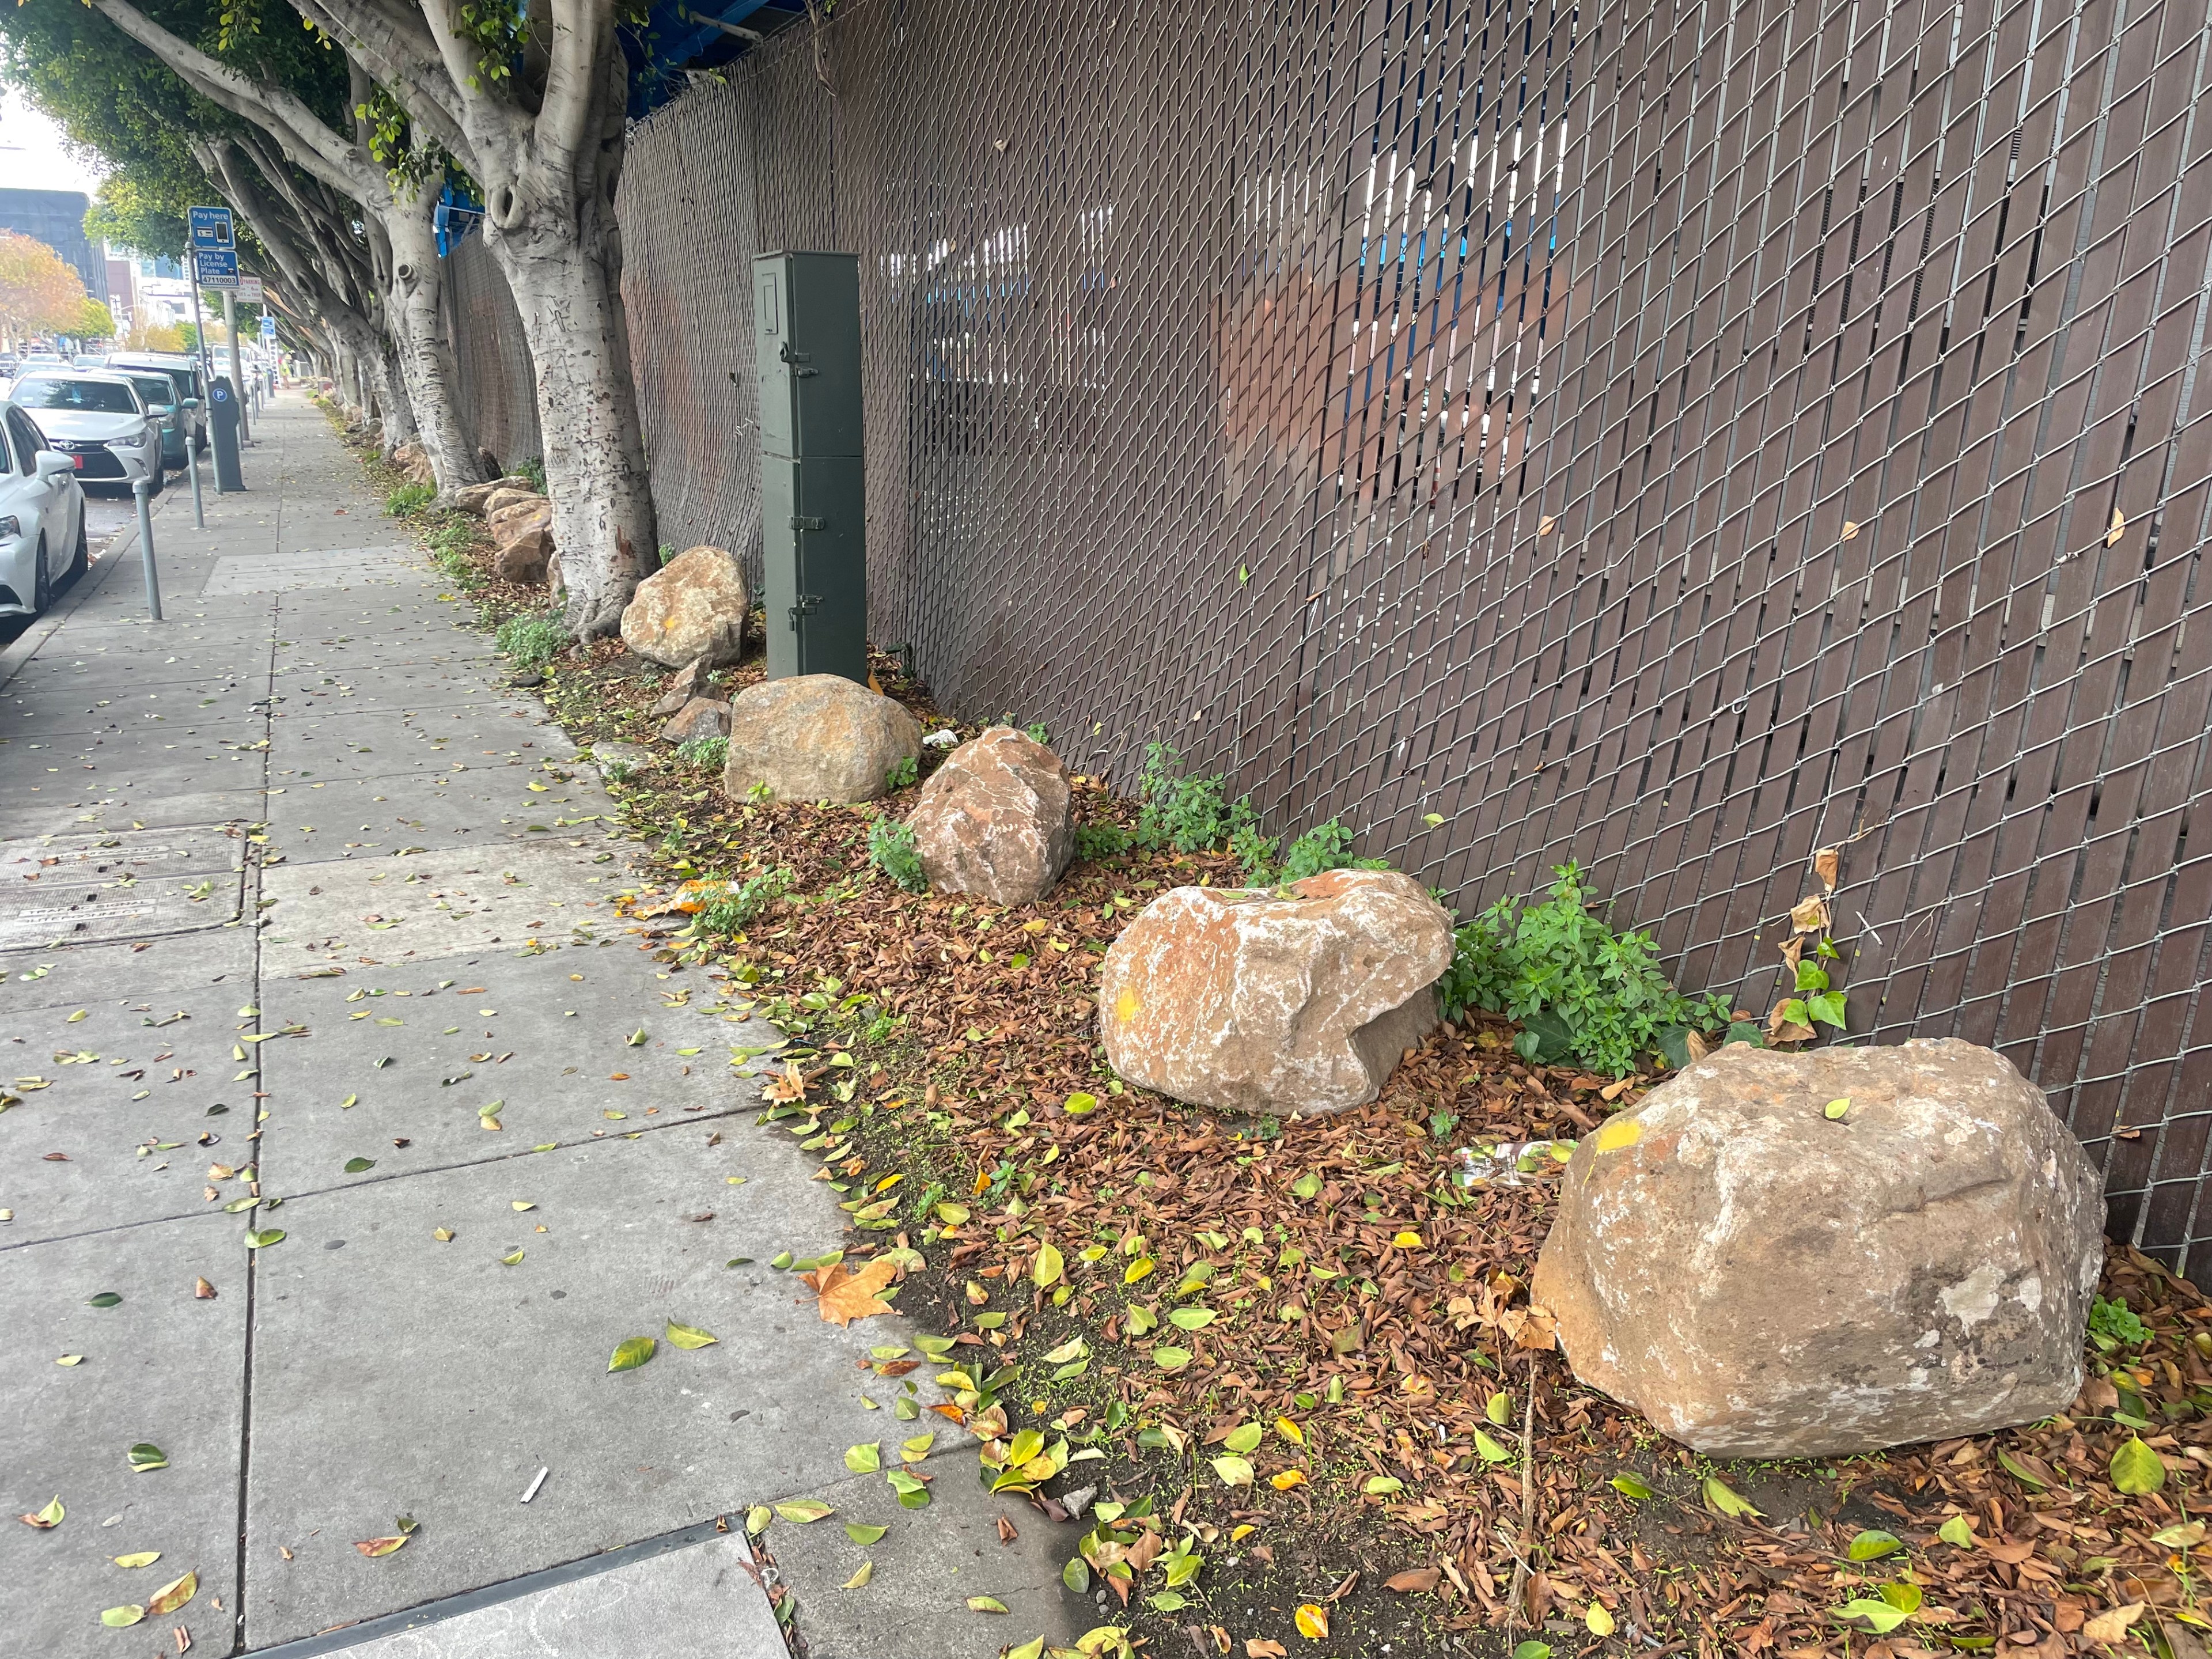 Rocks sit on dirt next to sidewalk.